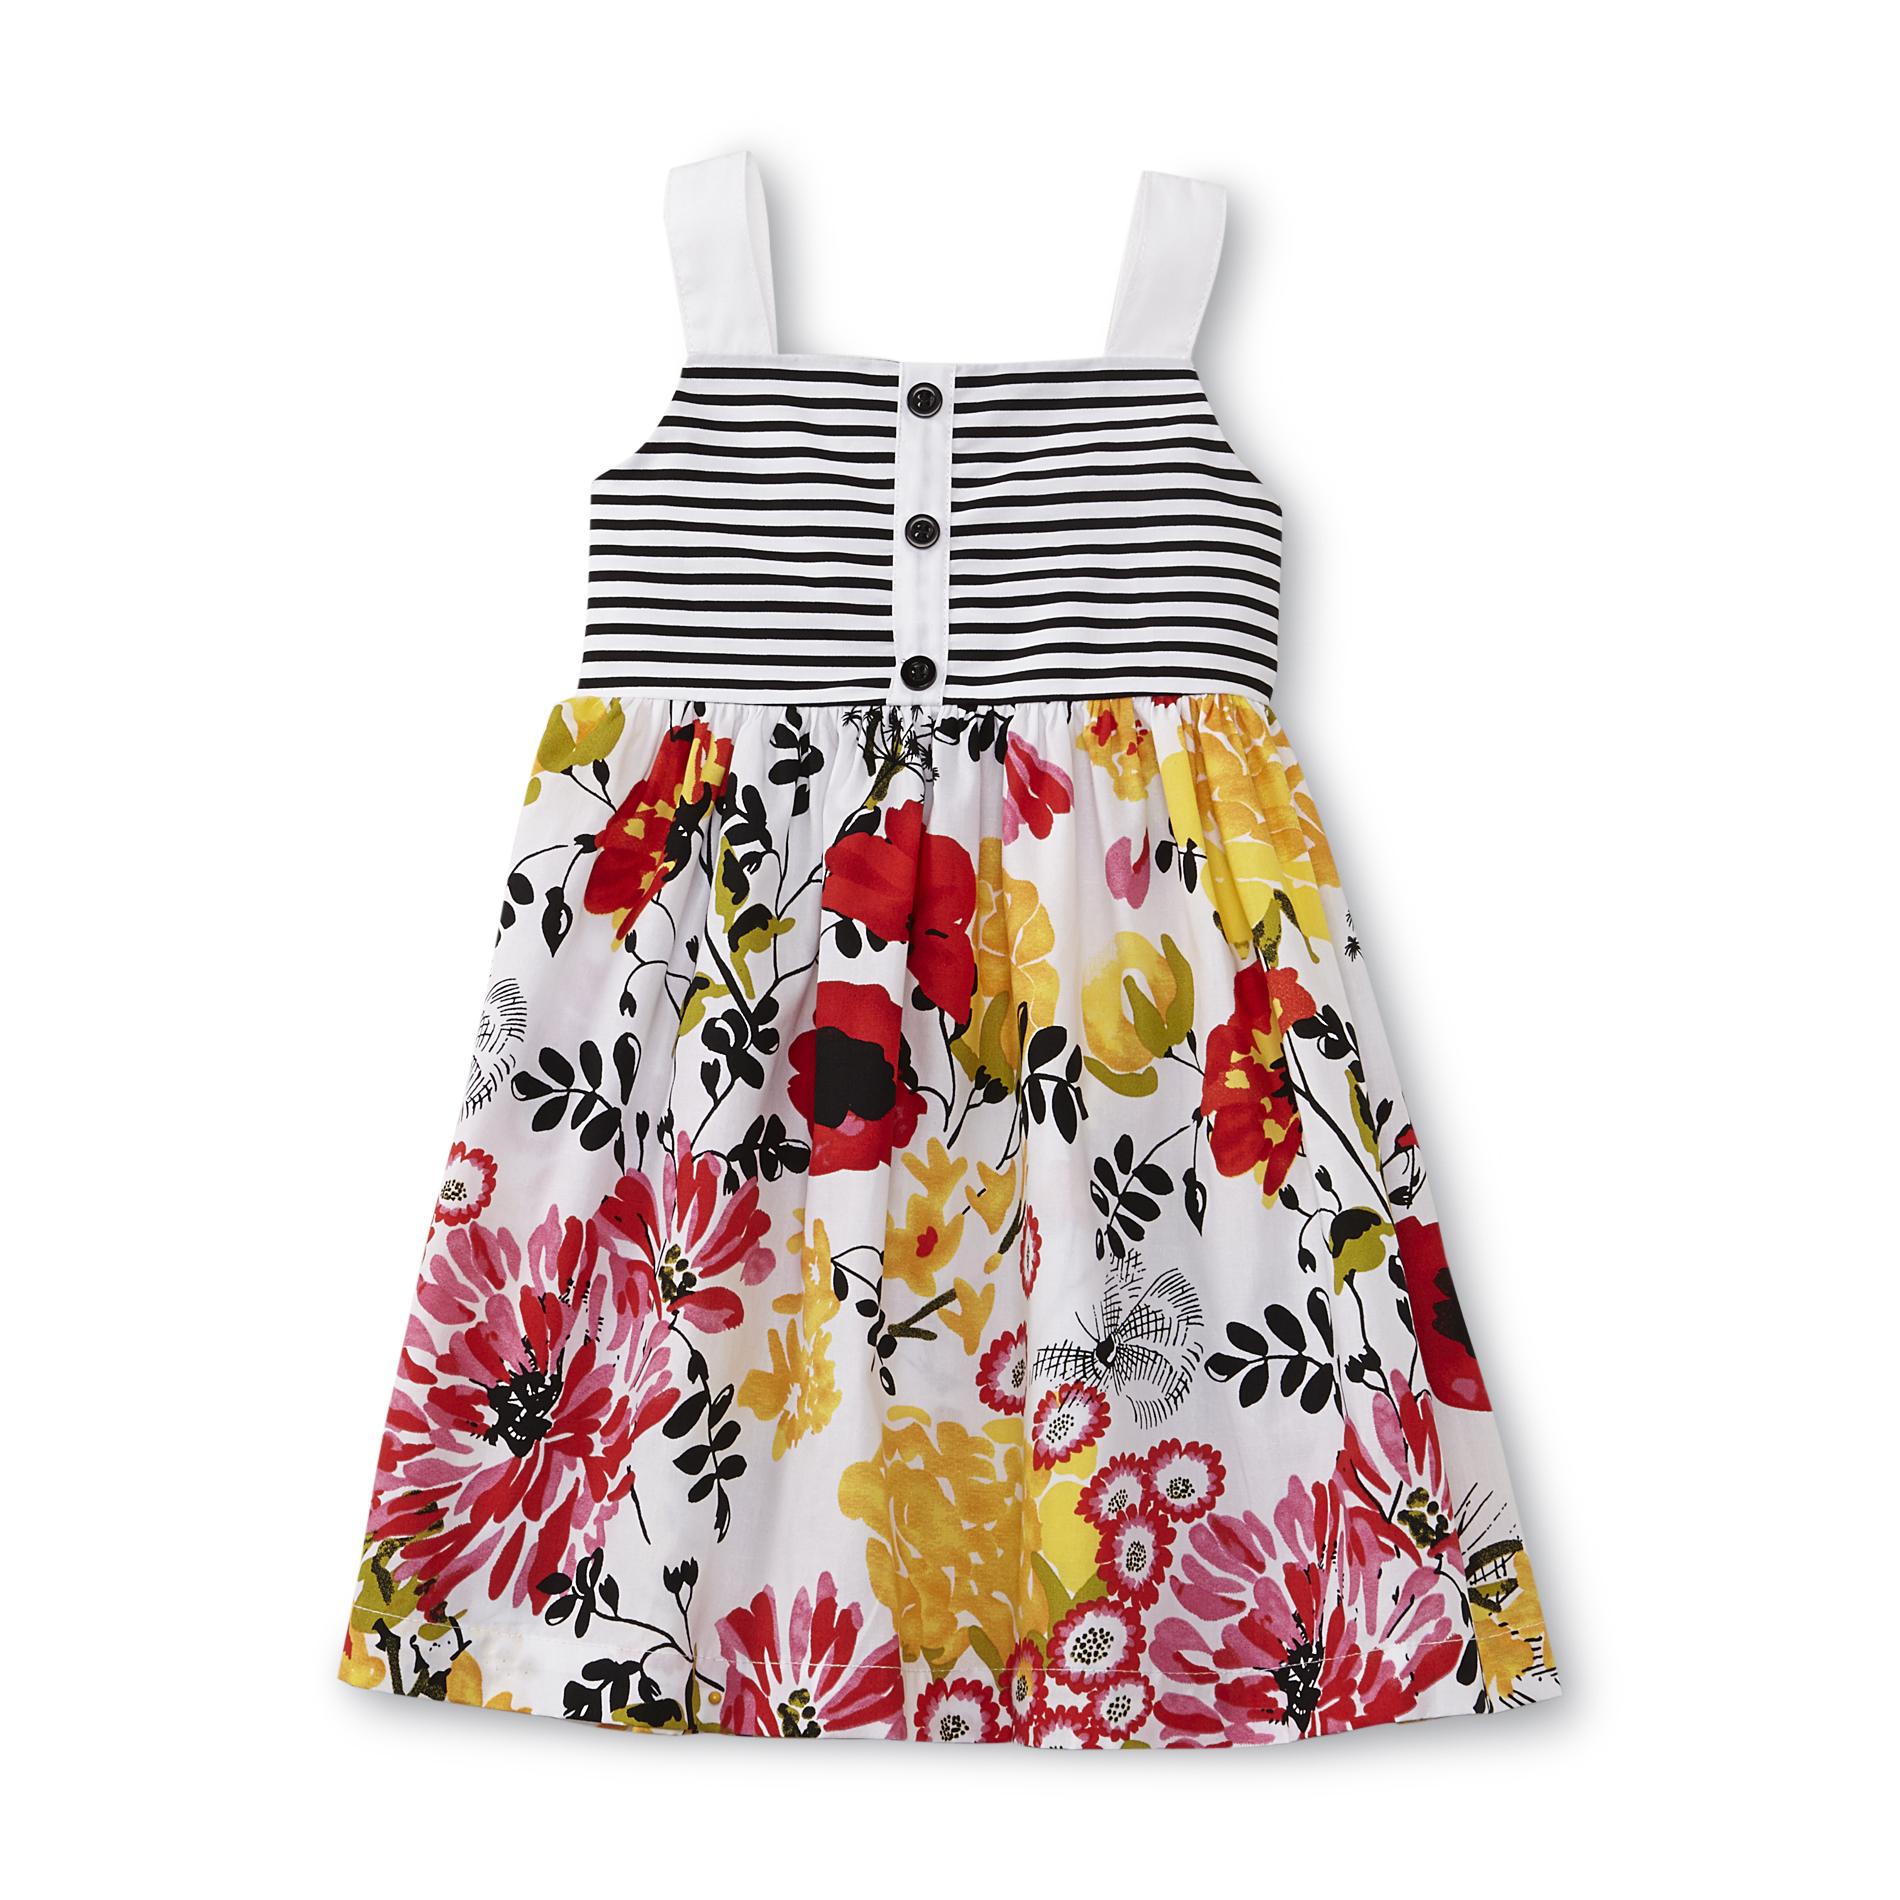 Blueberi Boulevard Infant & Toddler Girl's Party Dress - Floral & Striped